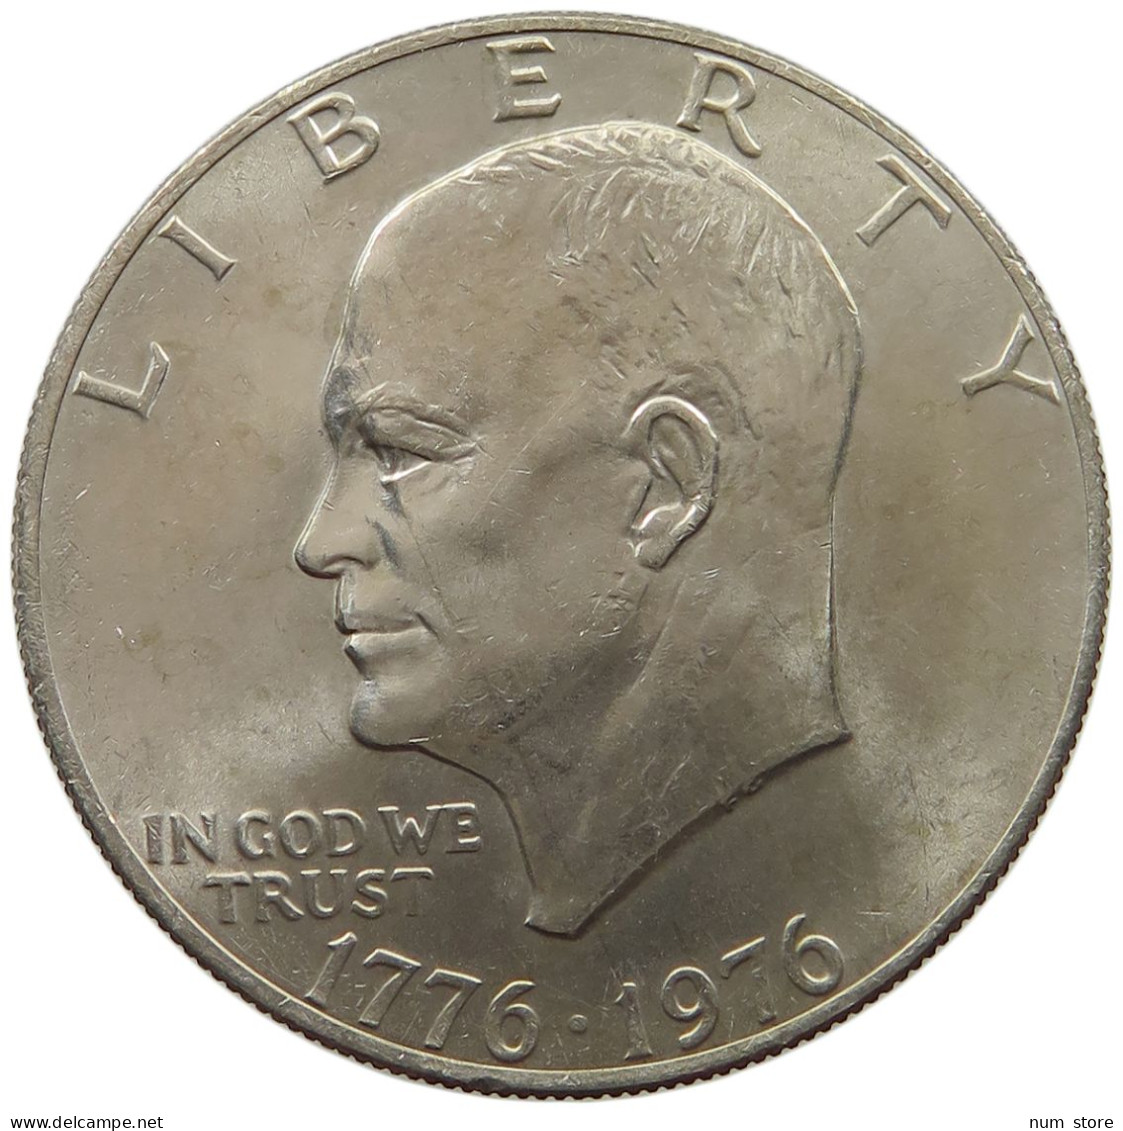 UNITED STATES OF AMERICA DOLLAR 1976 EISENHOWER #s062 0763 - 1971-1978: Eisenhower